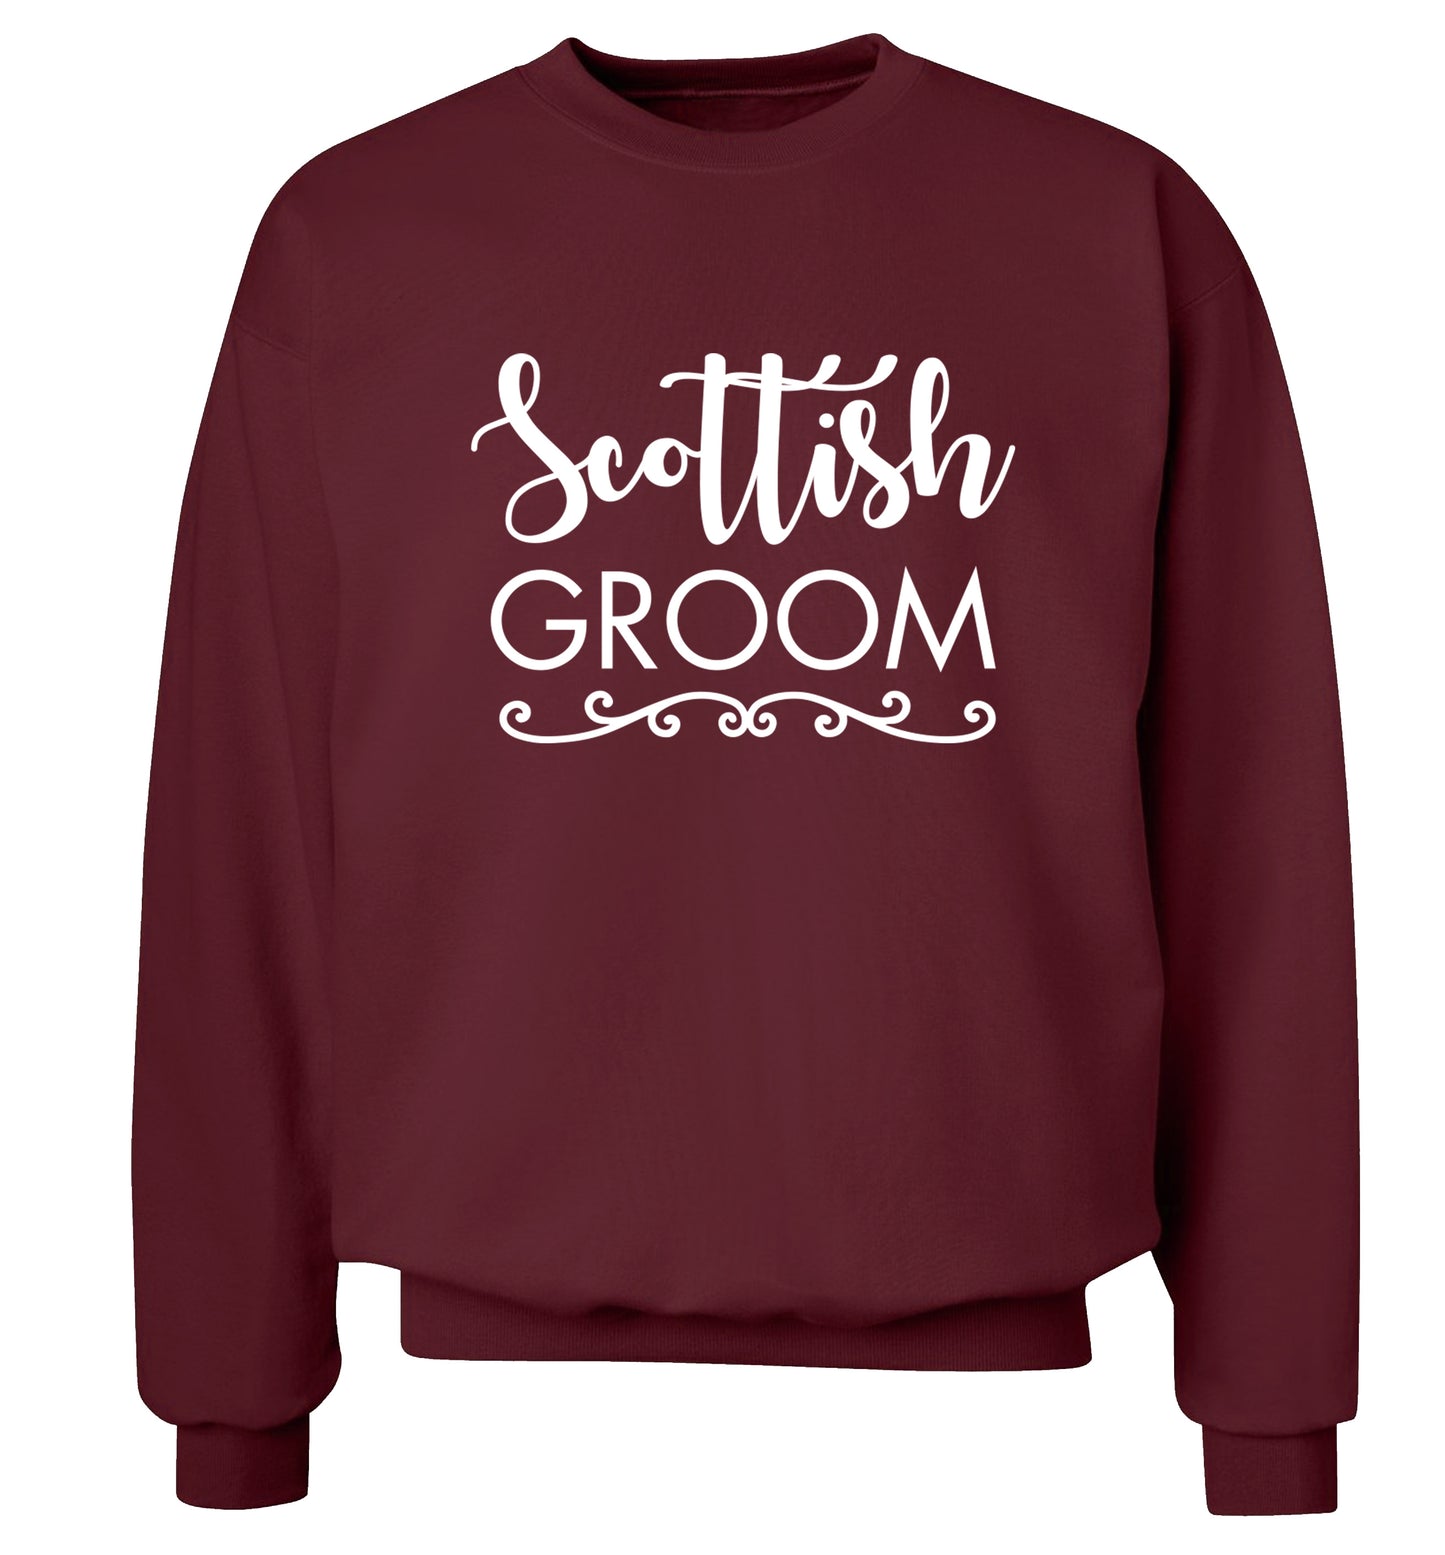 Scottish groom Adult's unisex maroon Sweater 2XL